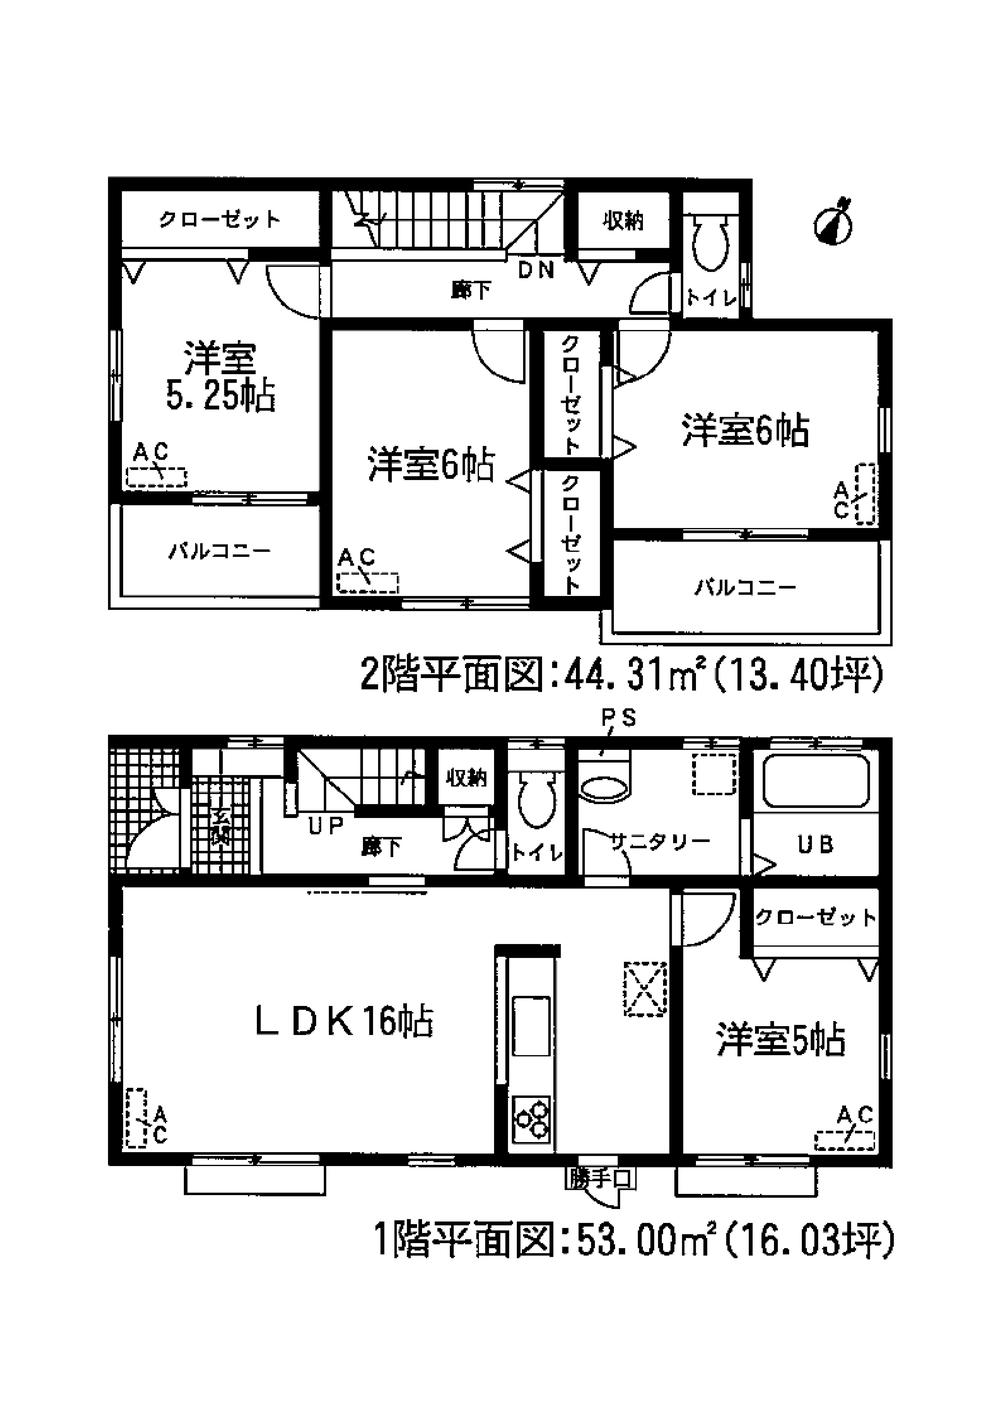 Floor plan. (Building 2), Price 28.8 million yen, 4LDK, Land area 137.61 sq m , Building area 97.31 sq m